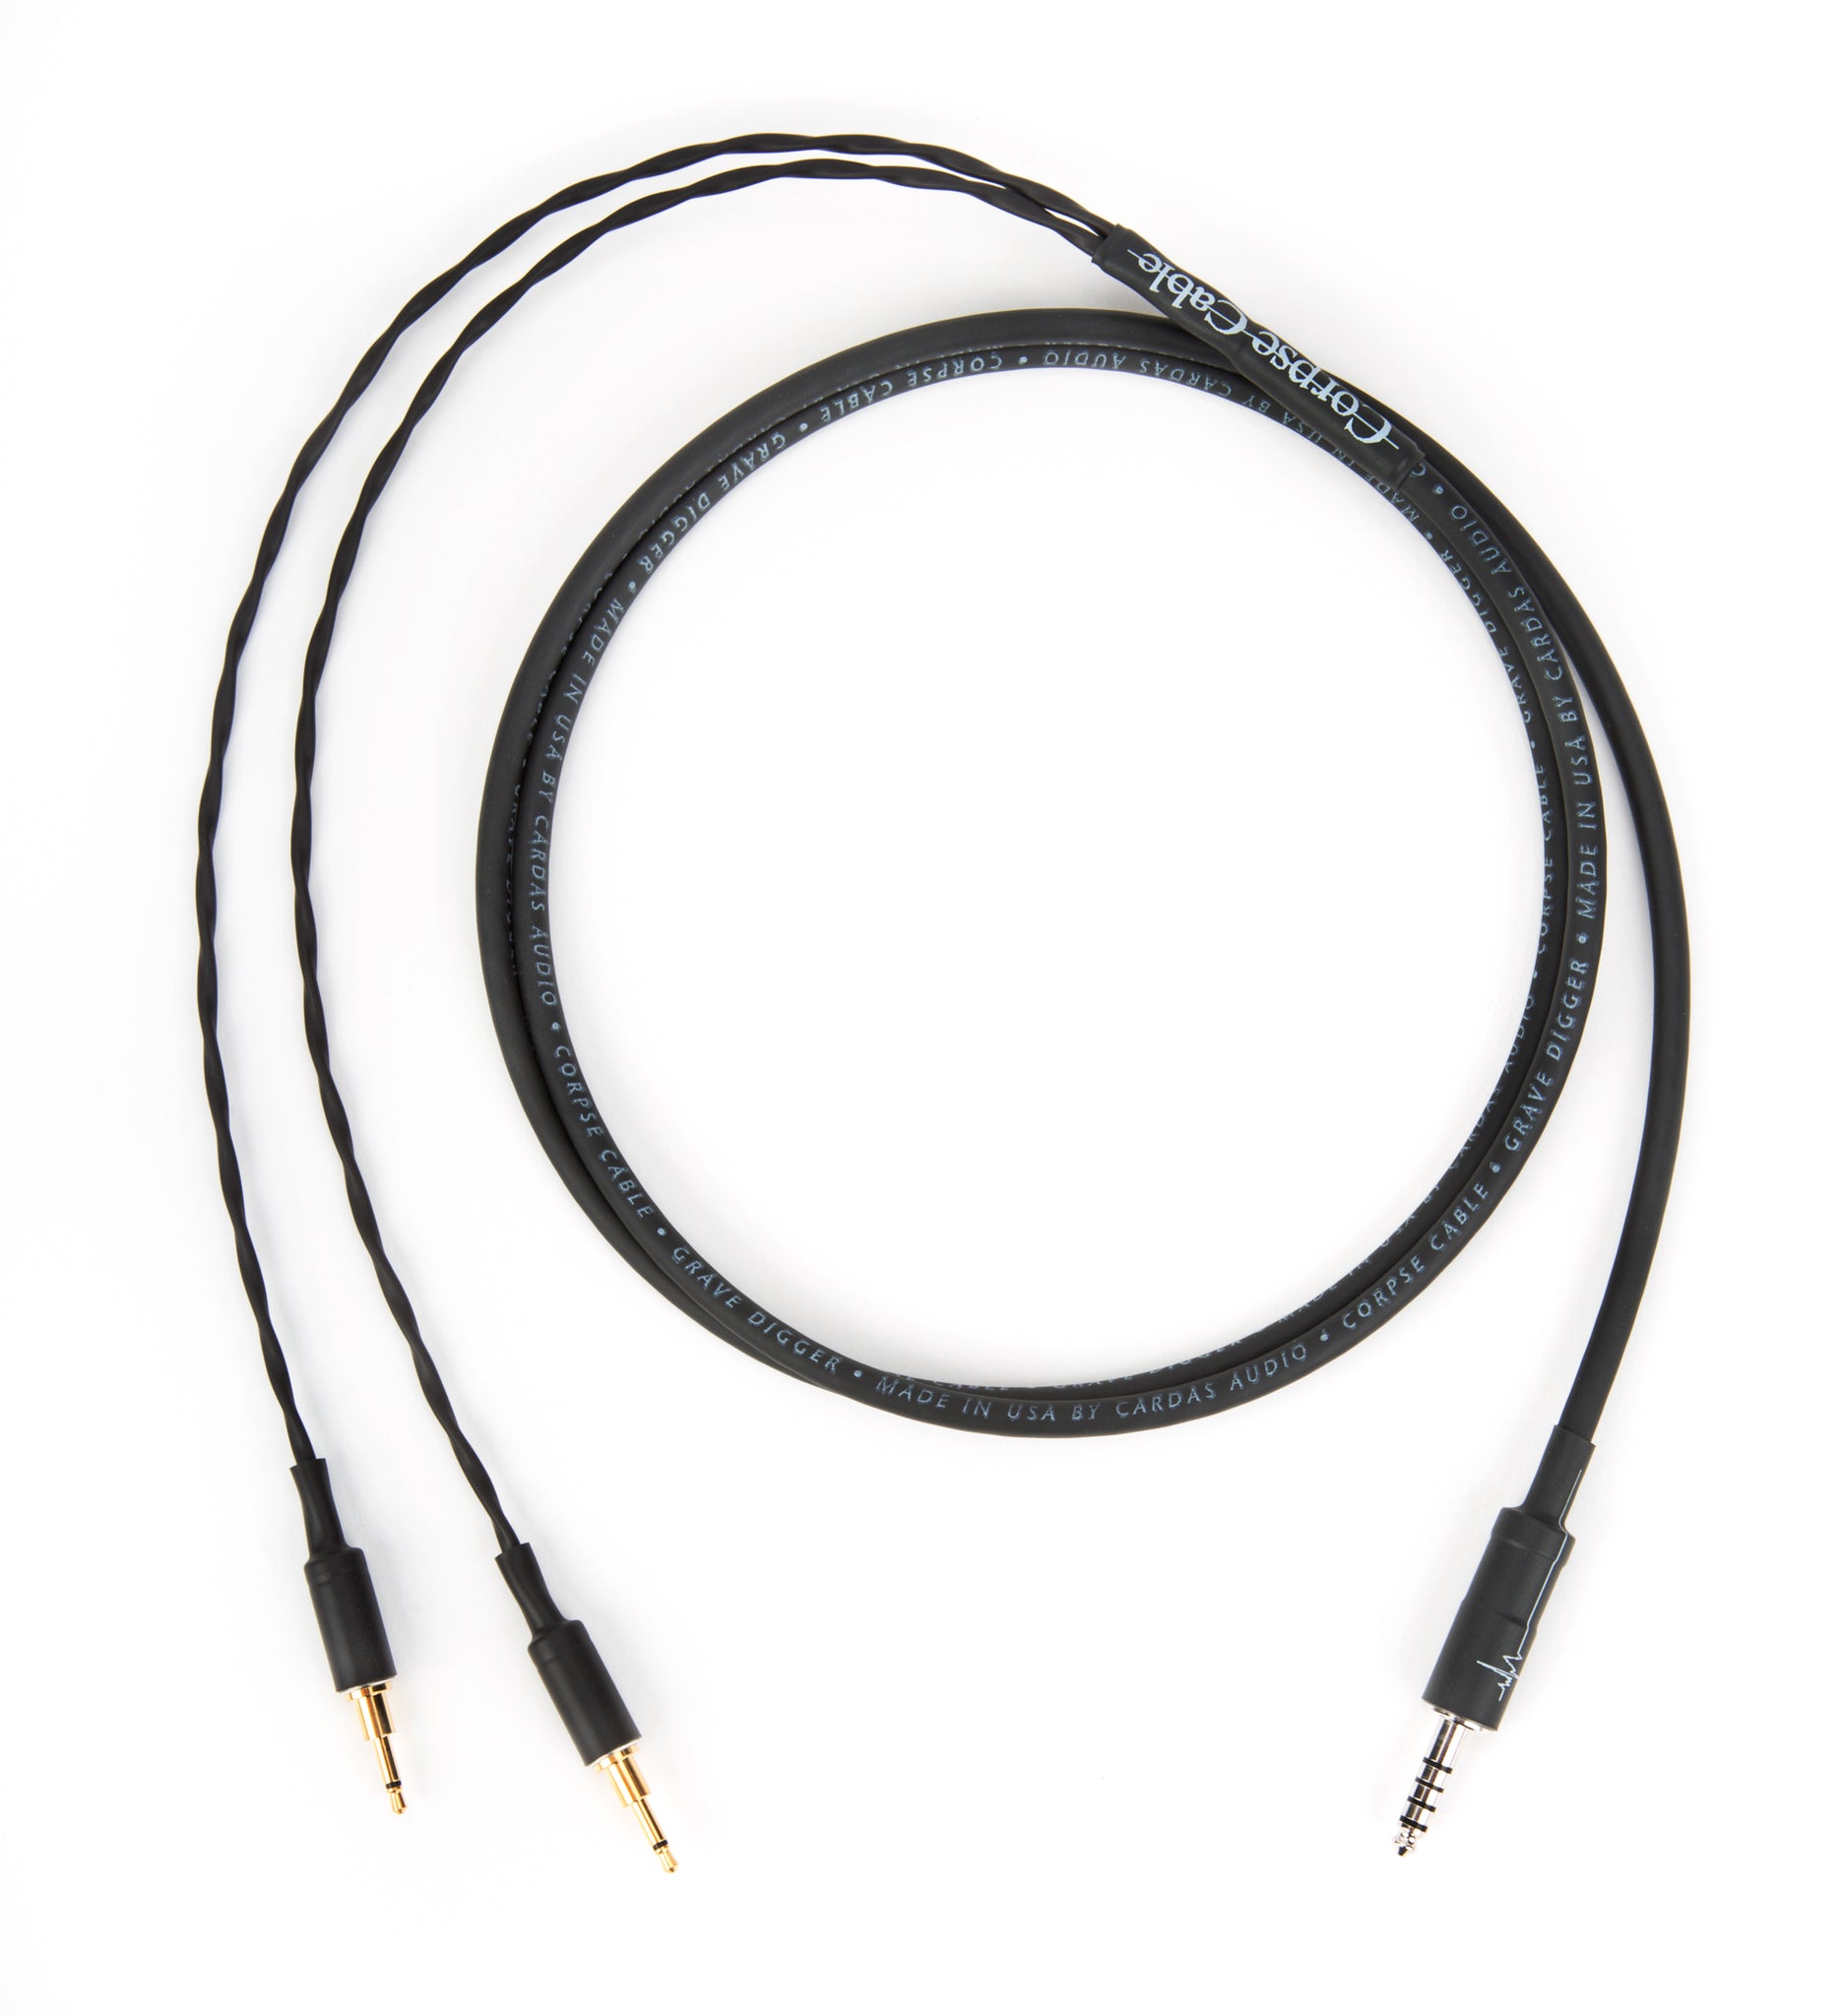 Custom Gr Edigger Cable For Sennheiser Hd 700 Headphones Corpse Cable